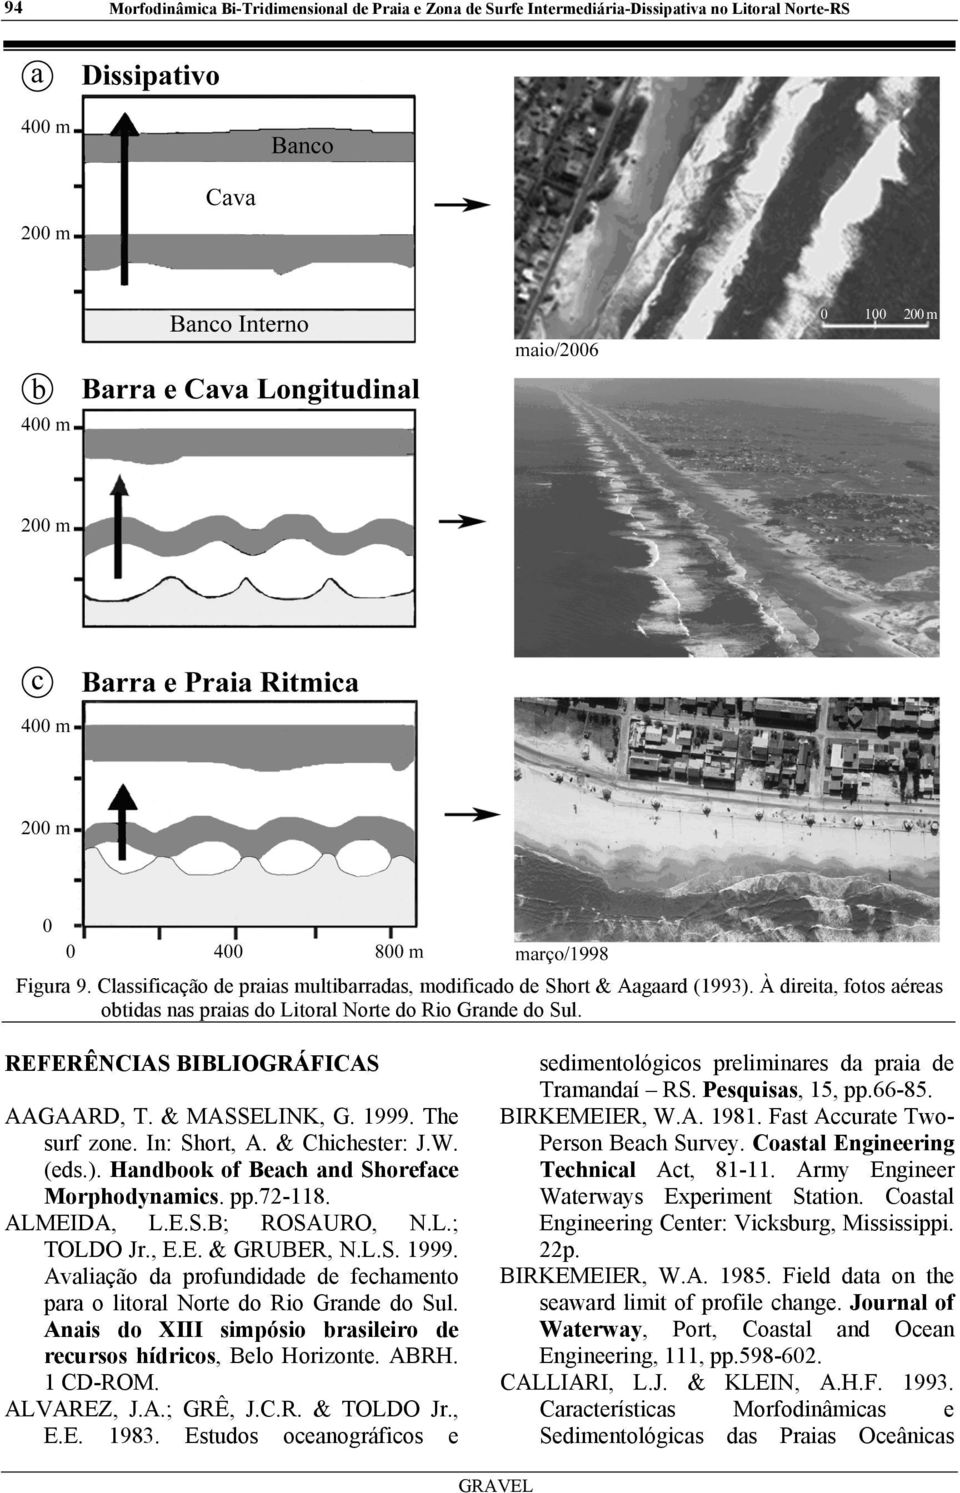 Handbook of Beach and Shoreface Morphodynamics. pp.72-118. ALMEIDA, L.E.S.B; ROSAURO, N.L.; TOLDO Jr., E.E. & GRUBER, N.L.S. 1999.